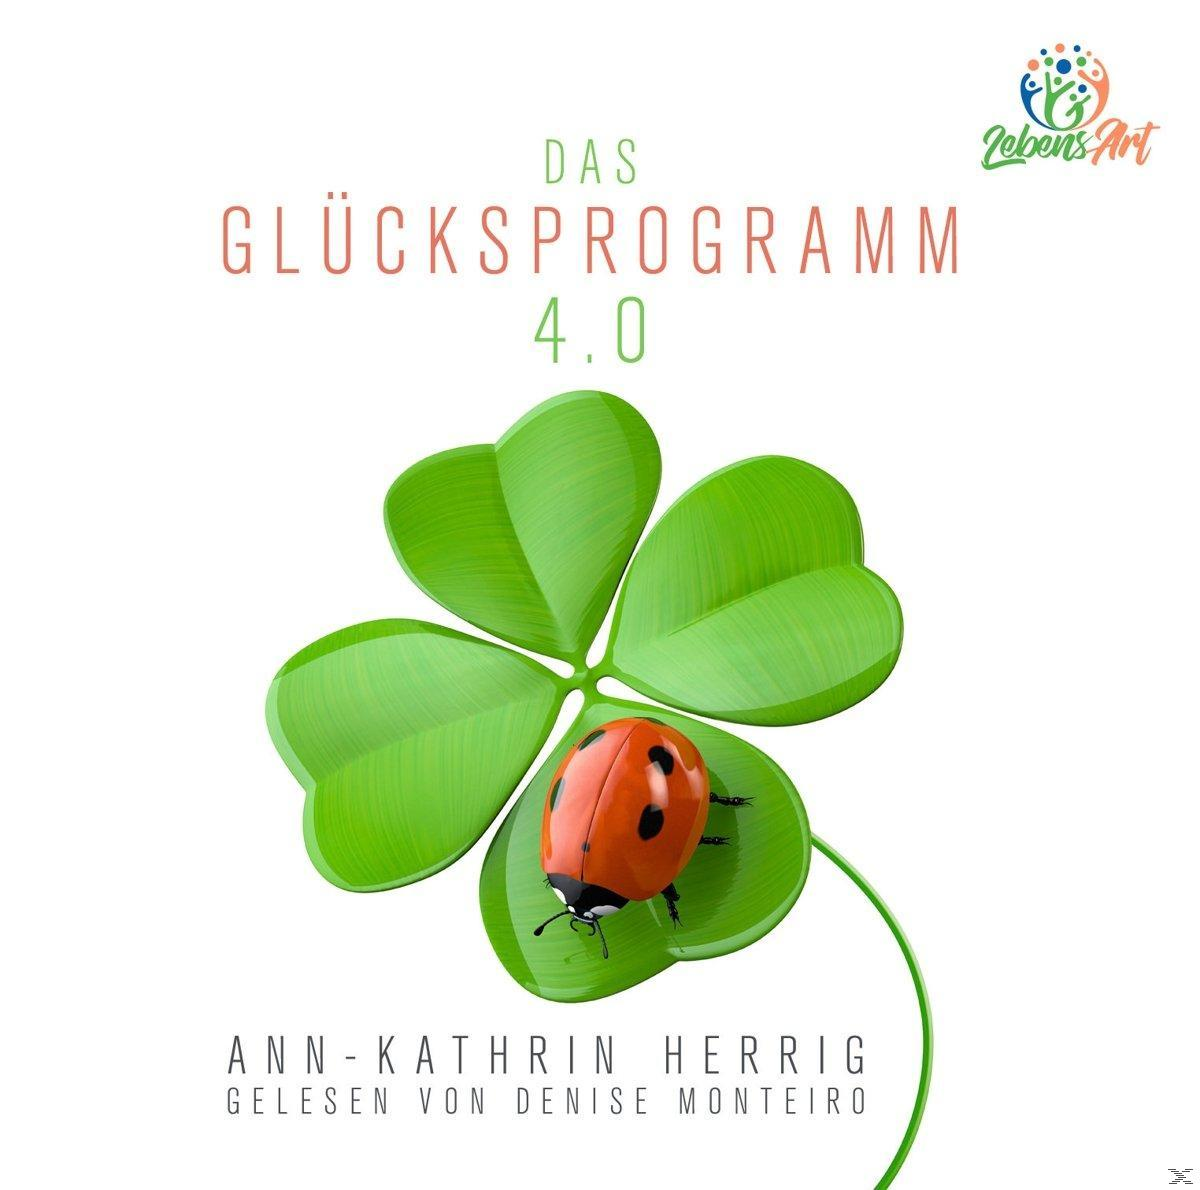 Ann-kathrin Herrig - Das (CD) Glücksprogramm - 4.0